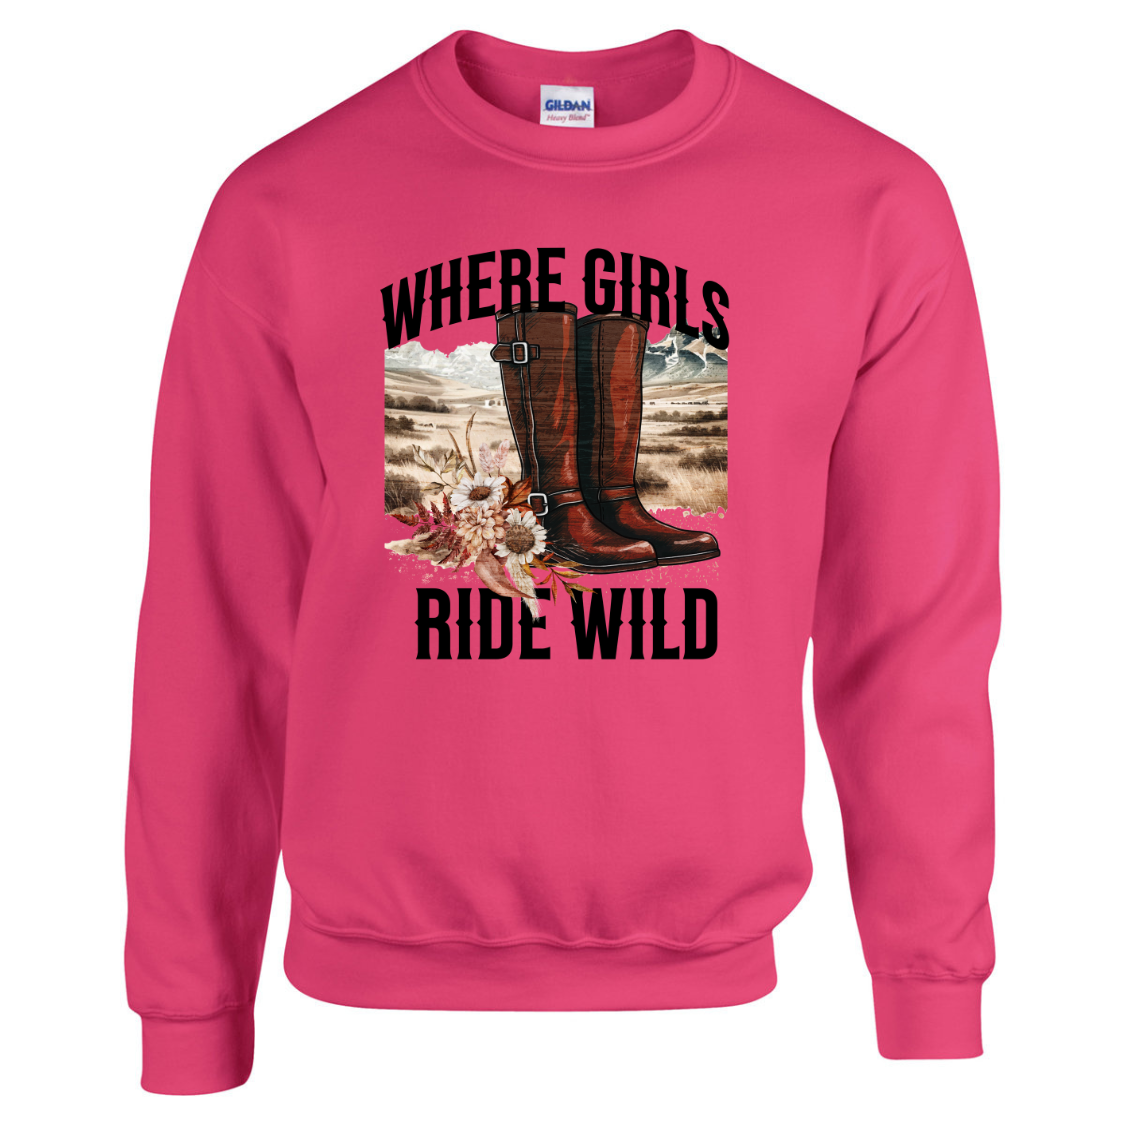 Where Girls Ride Wild: Unleash Your Inner Maverick in This Comfy Sweatshirt